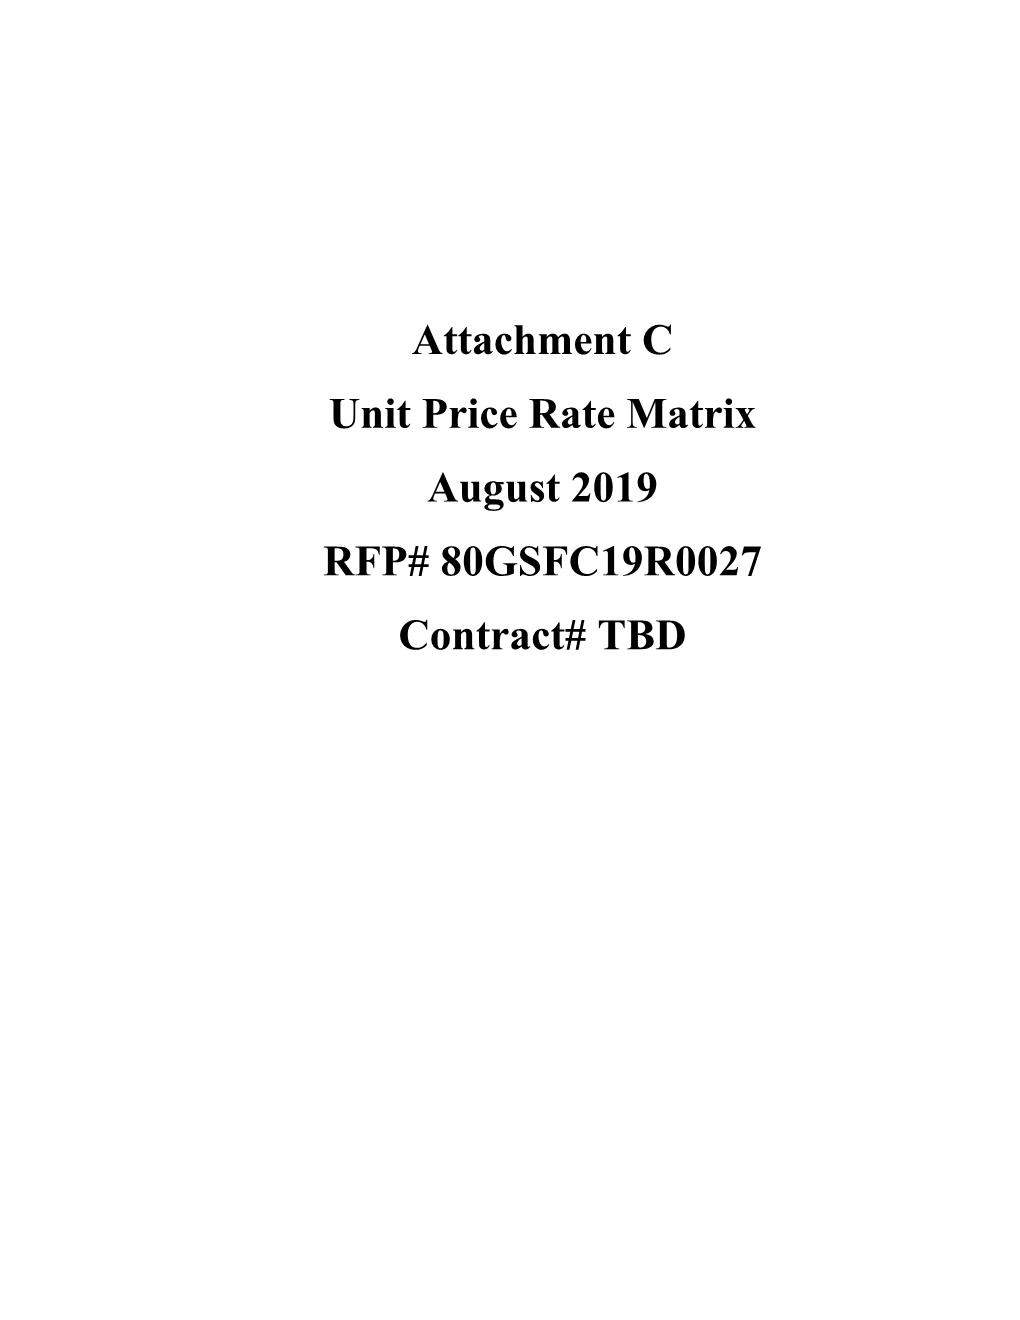 Attachment C Unit Price Rate Matrix August 2019 RFP# 80GSFC19R0027 Contract# TBD RFP #: 80GSFC19R0027 Contract #: TBD Attachment C Unit Price Rate Matrix